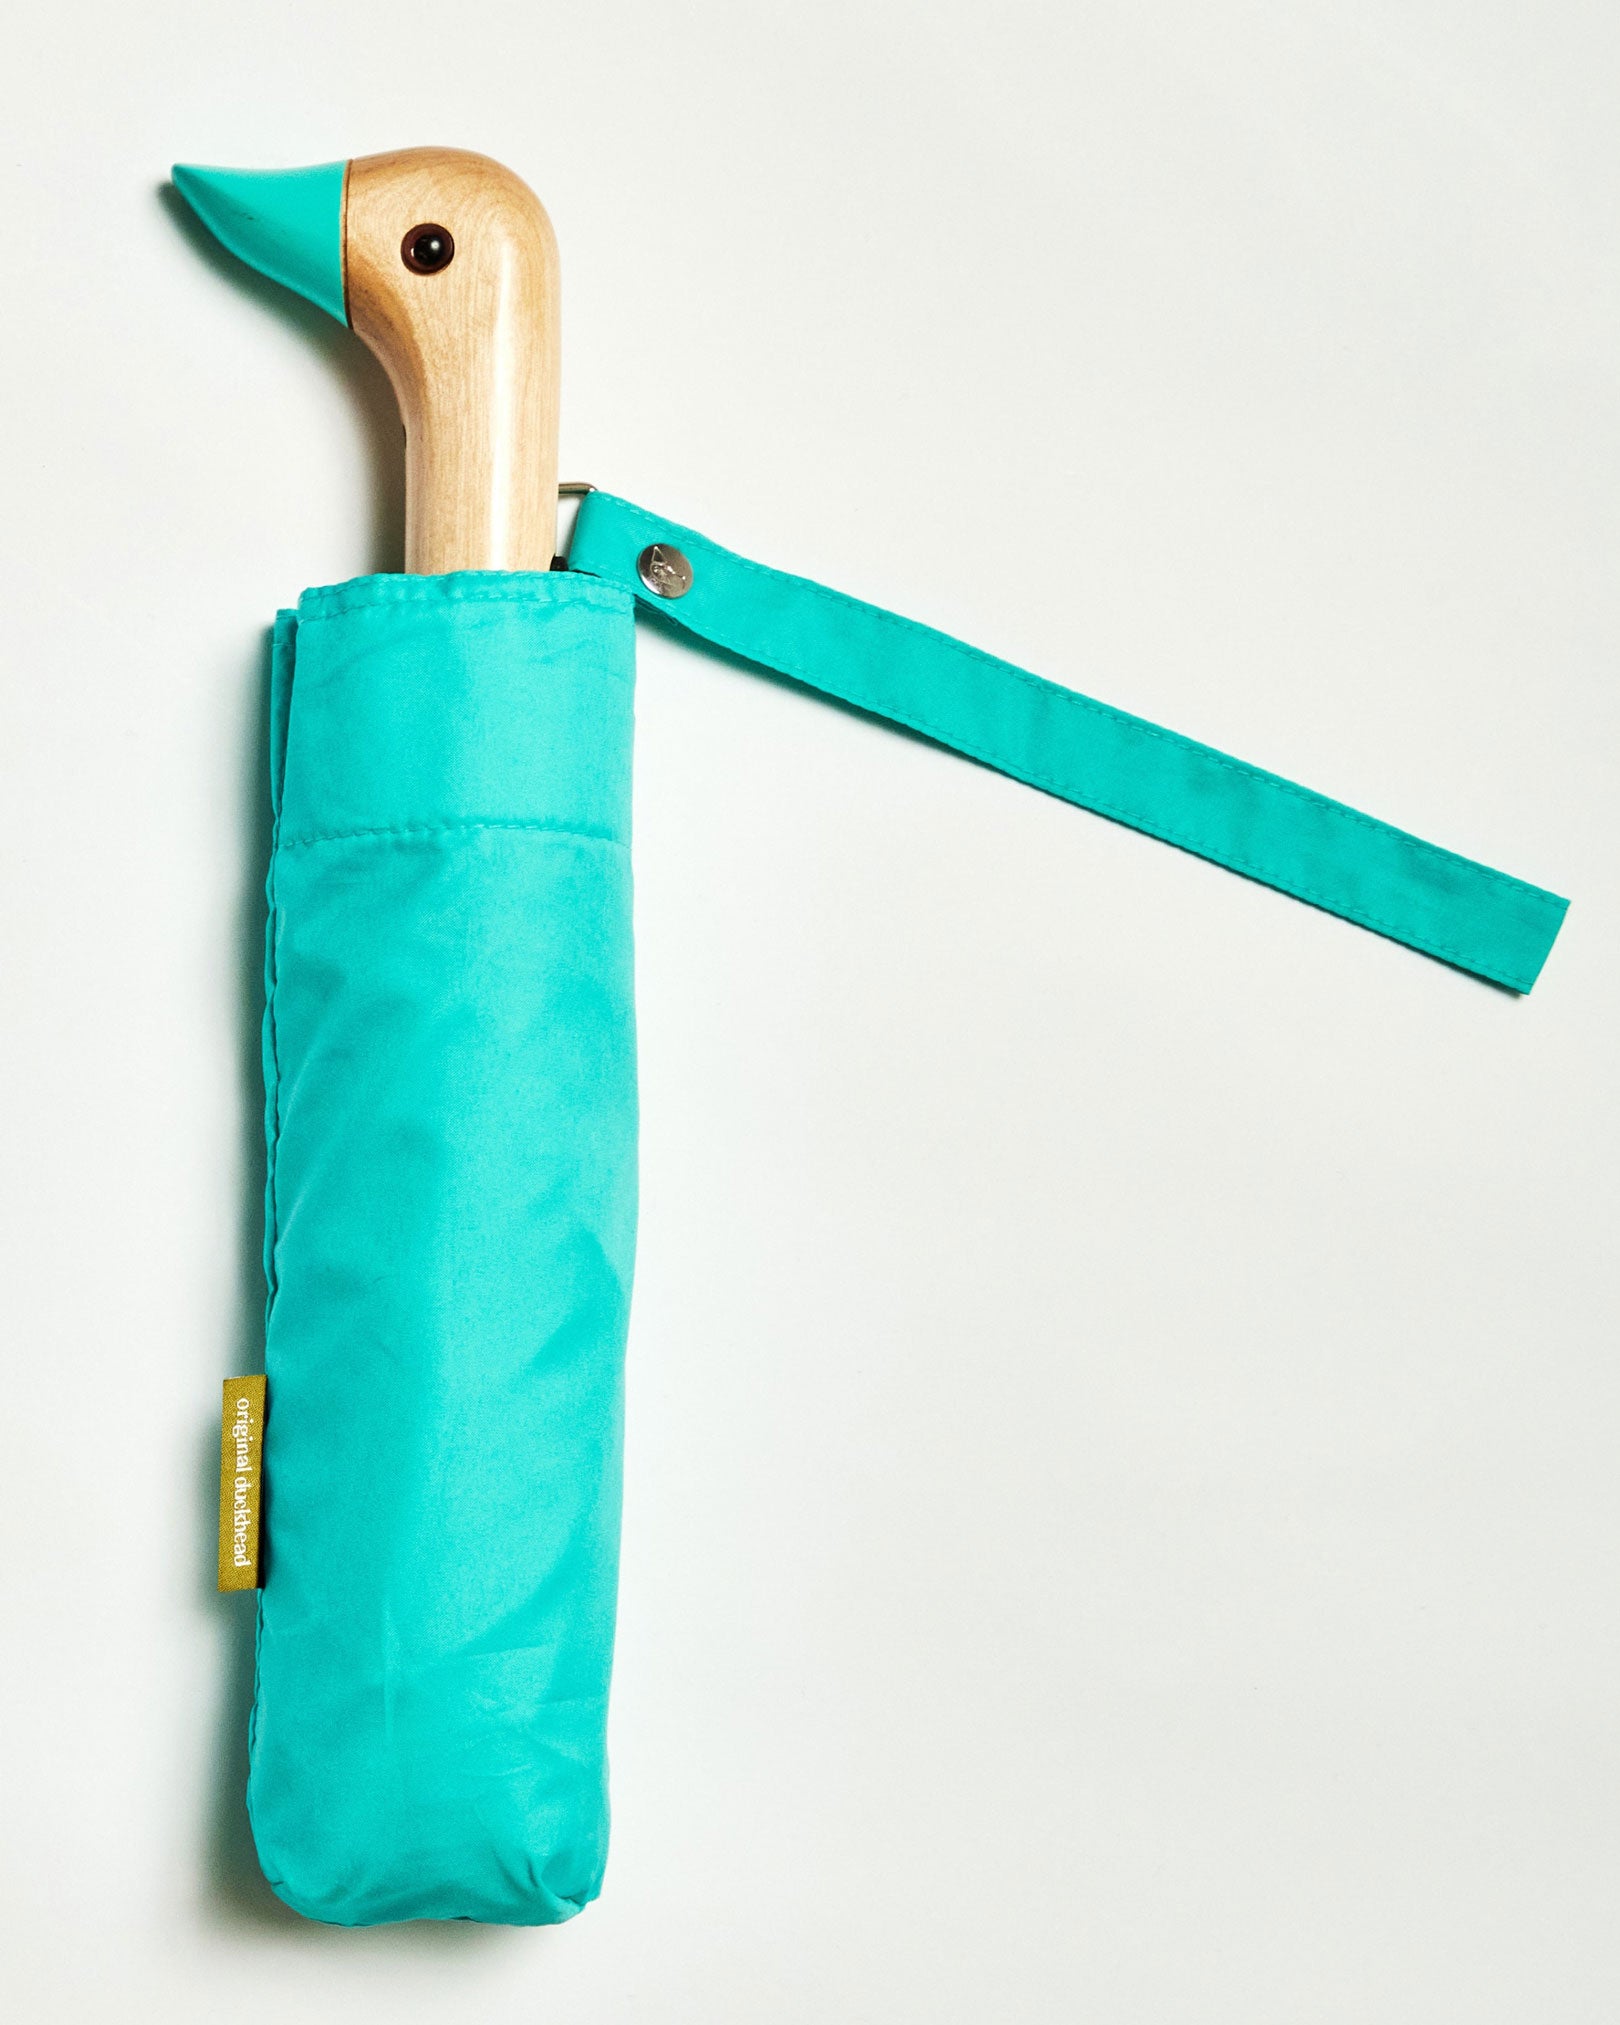 ORIGINAL DUCKHEAD Compact Umbrella in Mint available at Lahn.shop